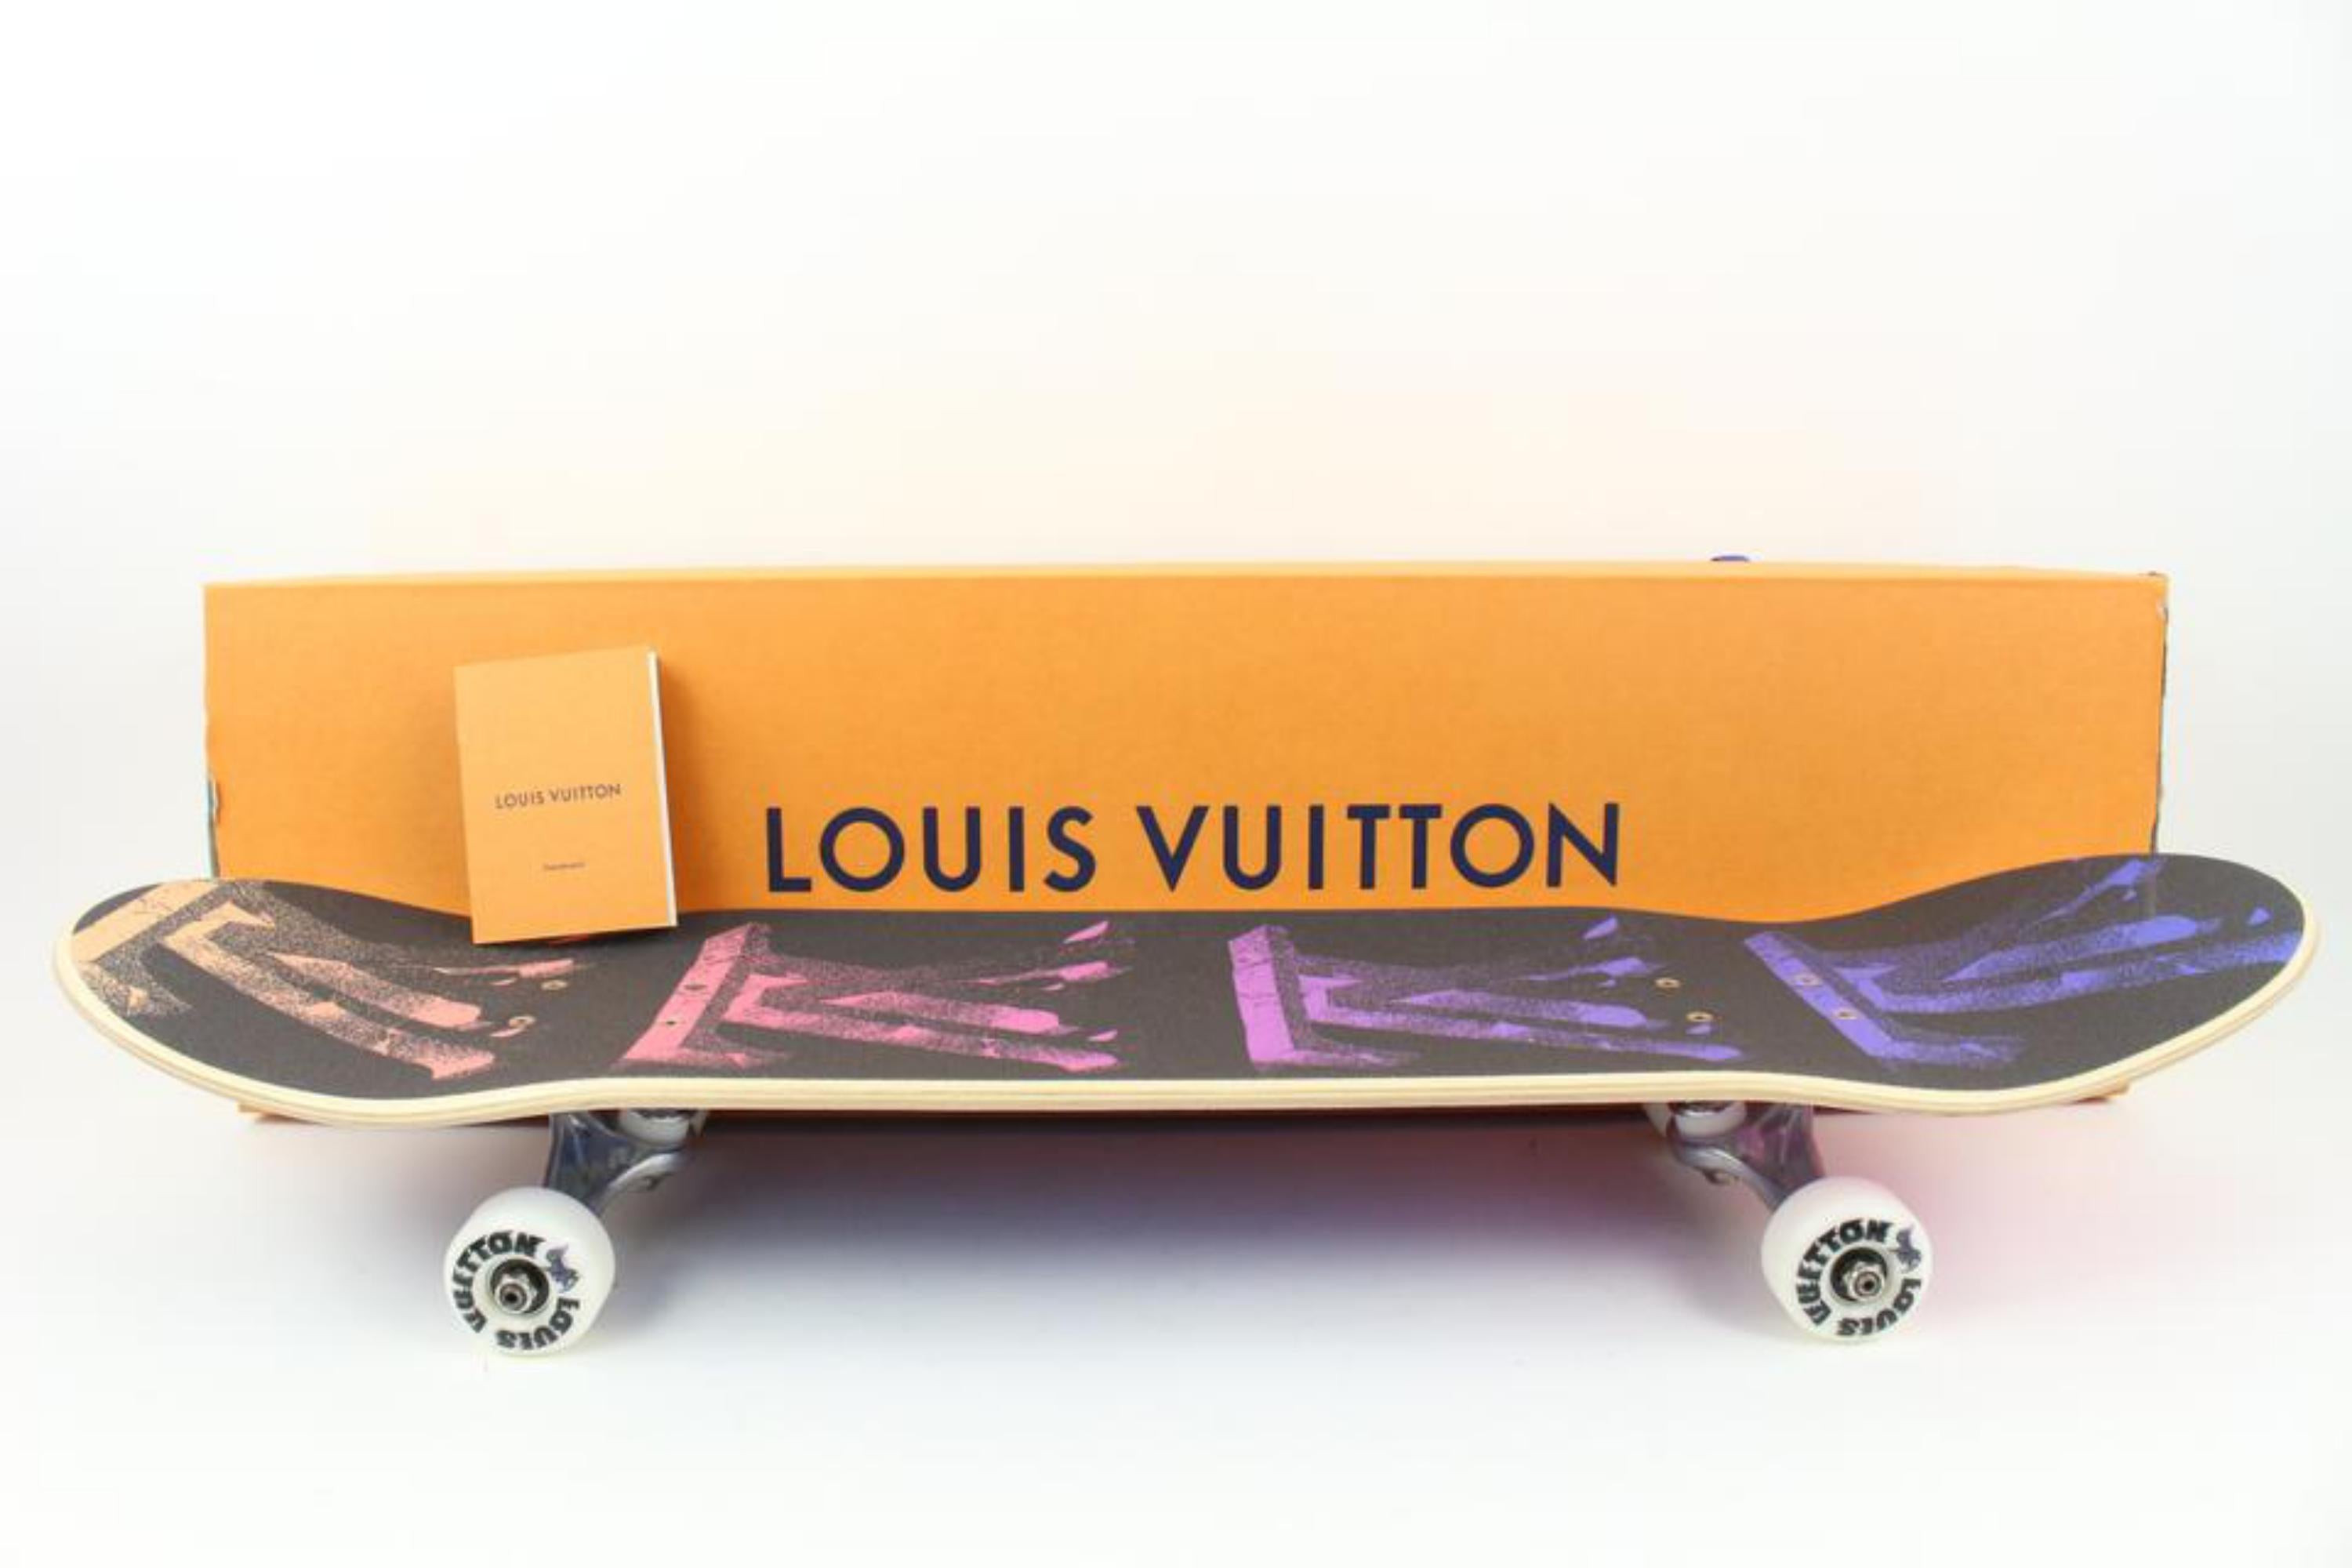 Louis Vuitton Virgil Abloh Neon LV Monogram Skateboard 118lv26 For Sale 2